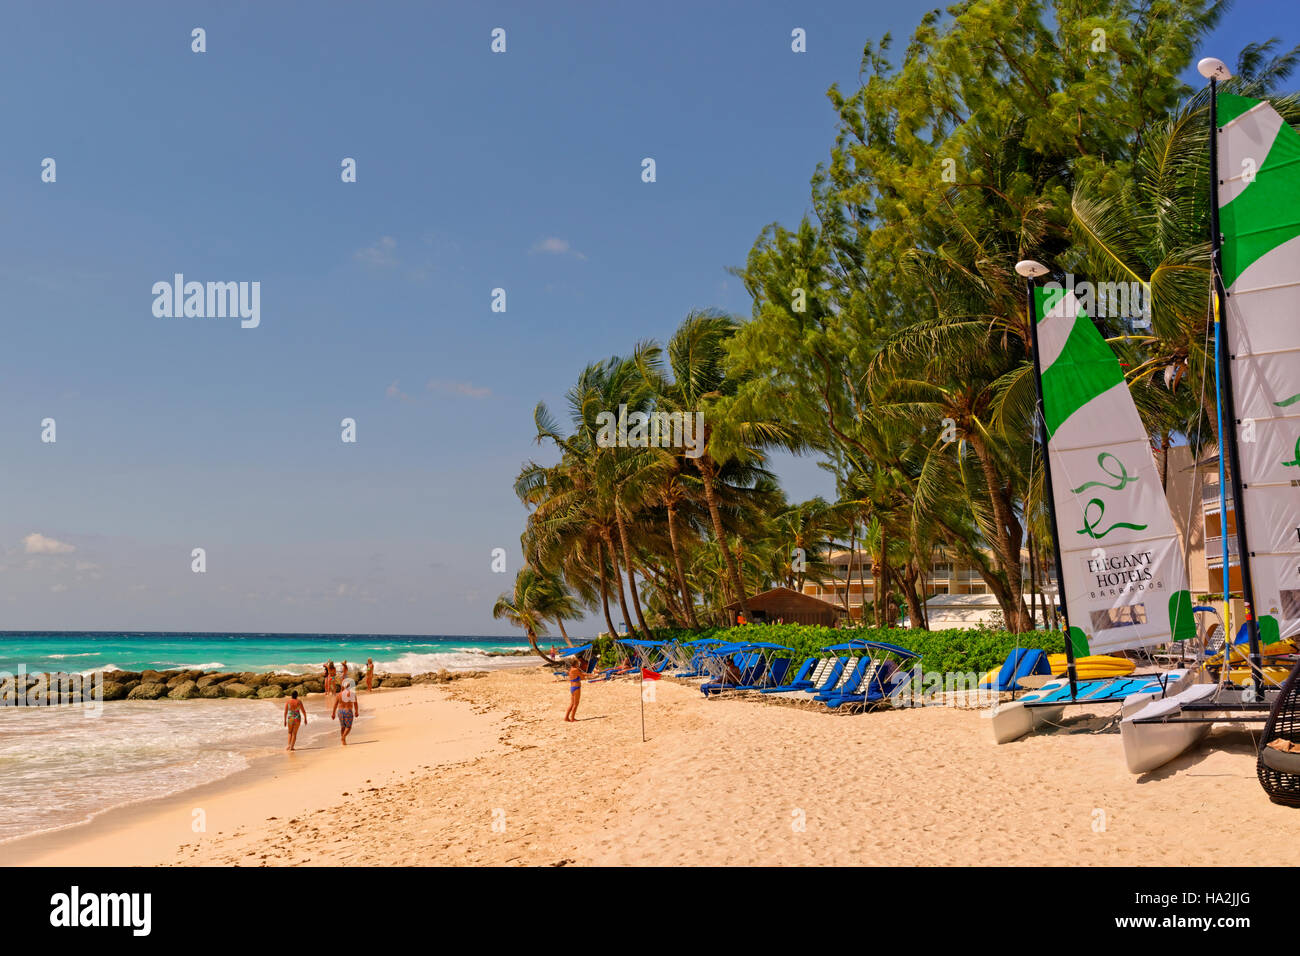 Turtle Beach Hotel and public beach, Dover Beach, St. Lawrence Gap, Barbados, Caribbean. Stock Photo